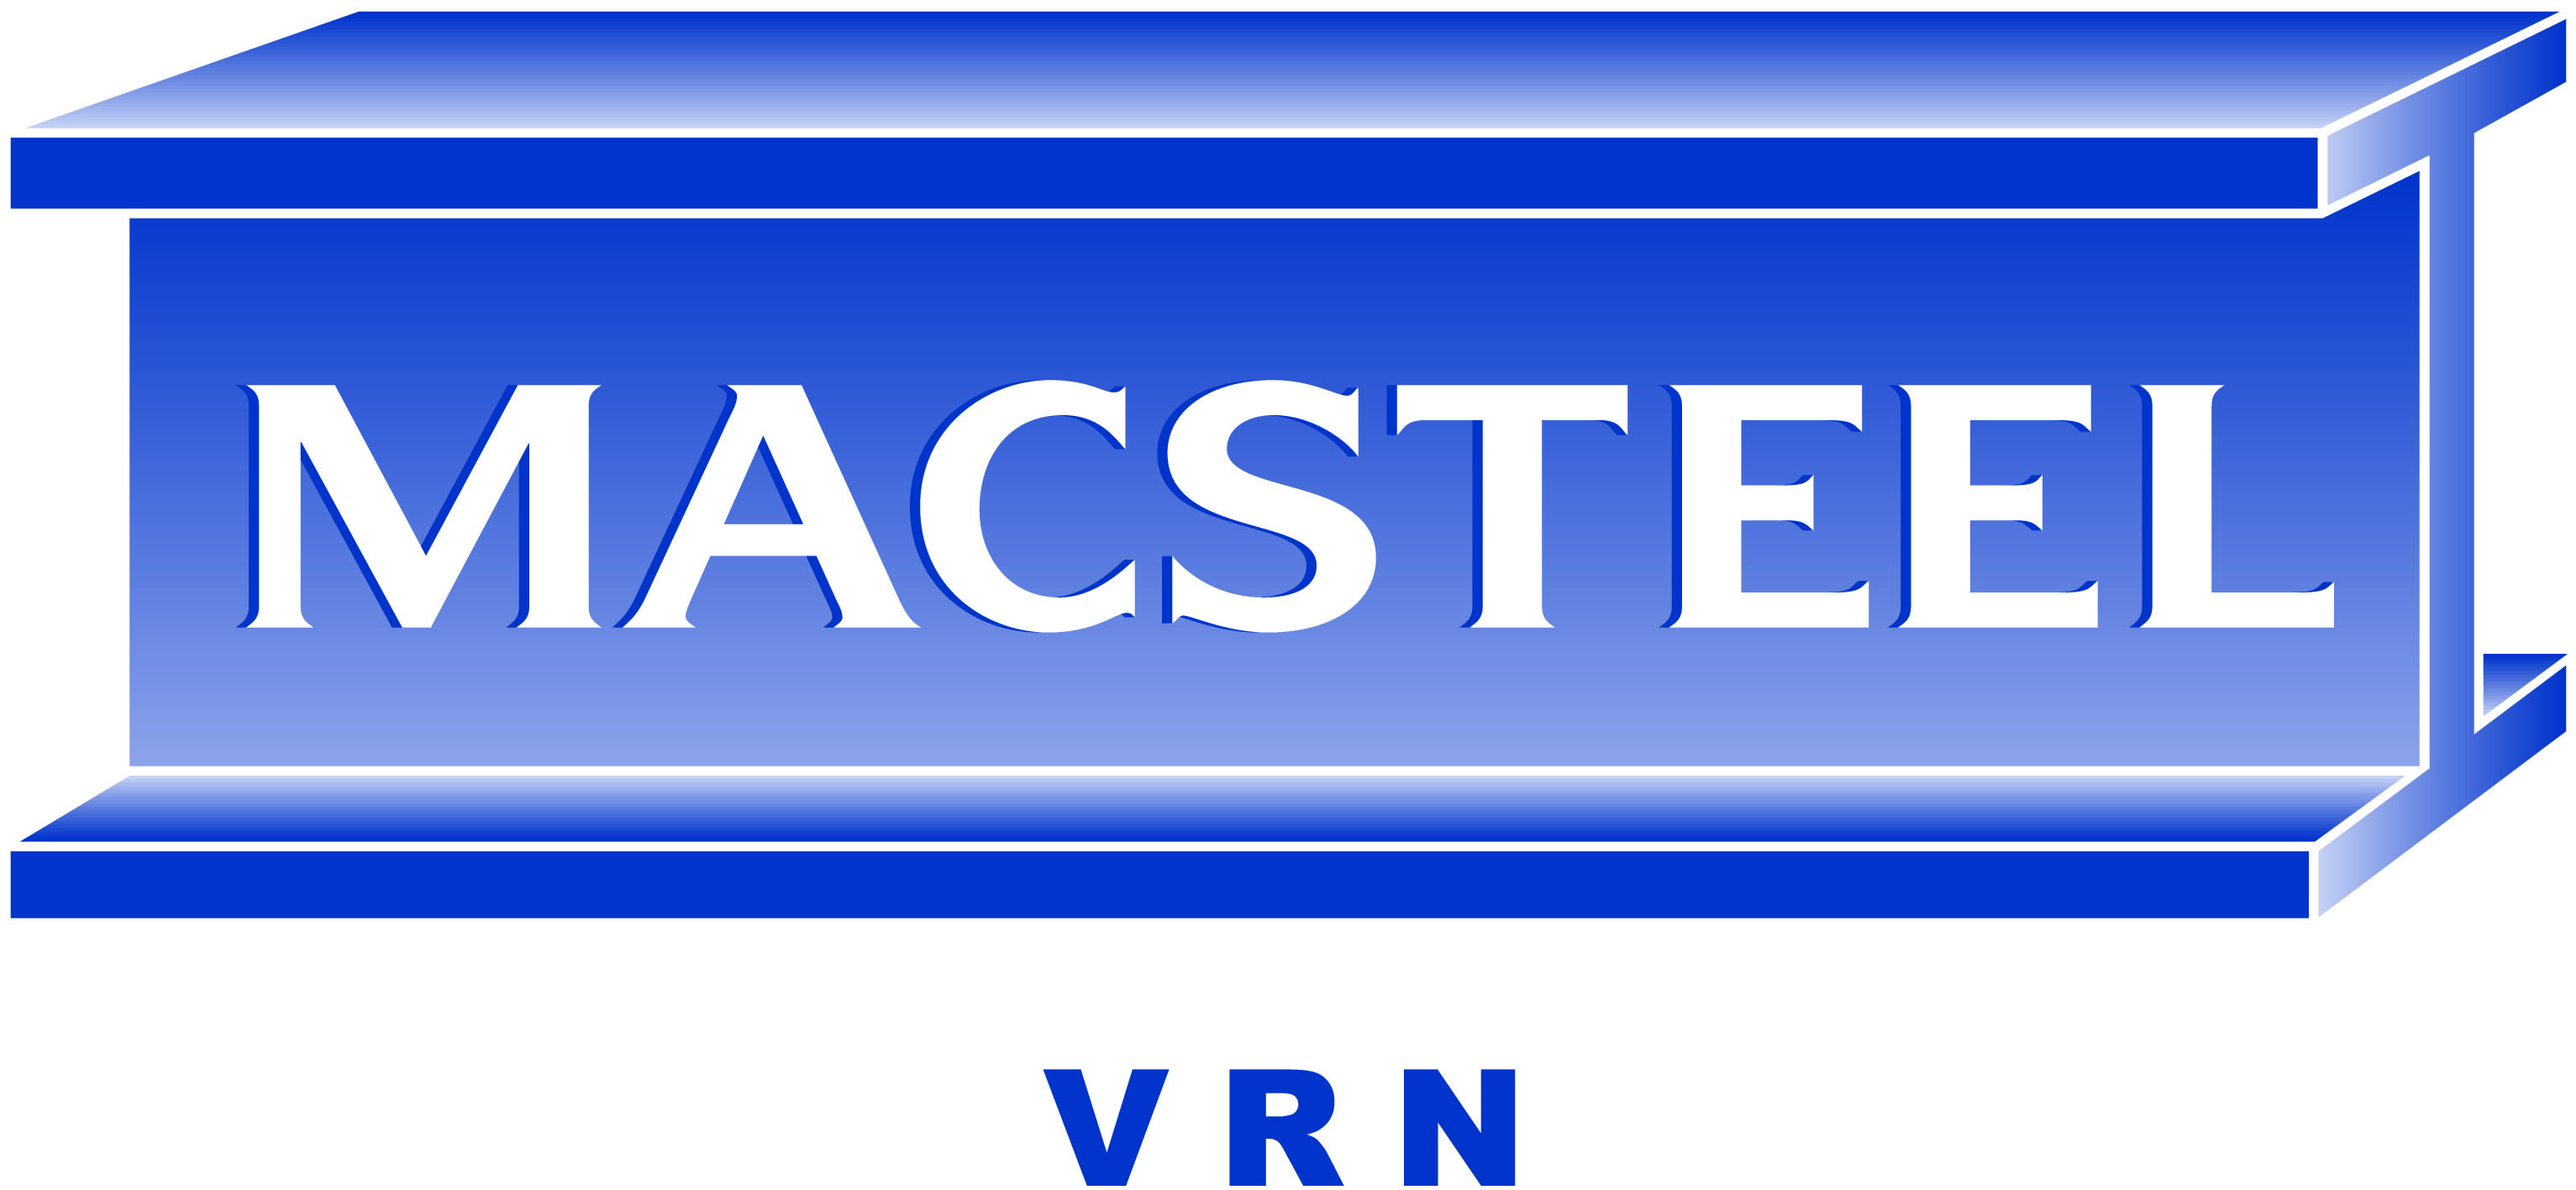 Macsteel Vrn - Klerksdorp logo